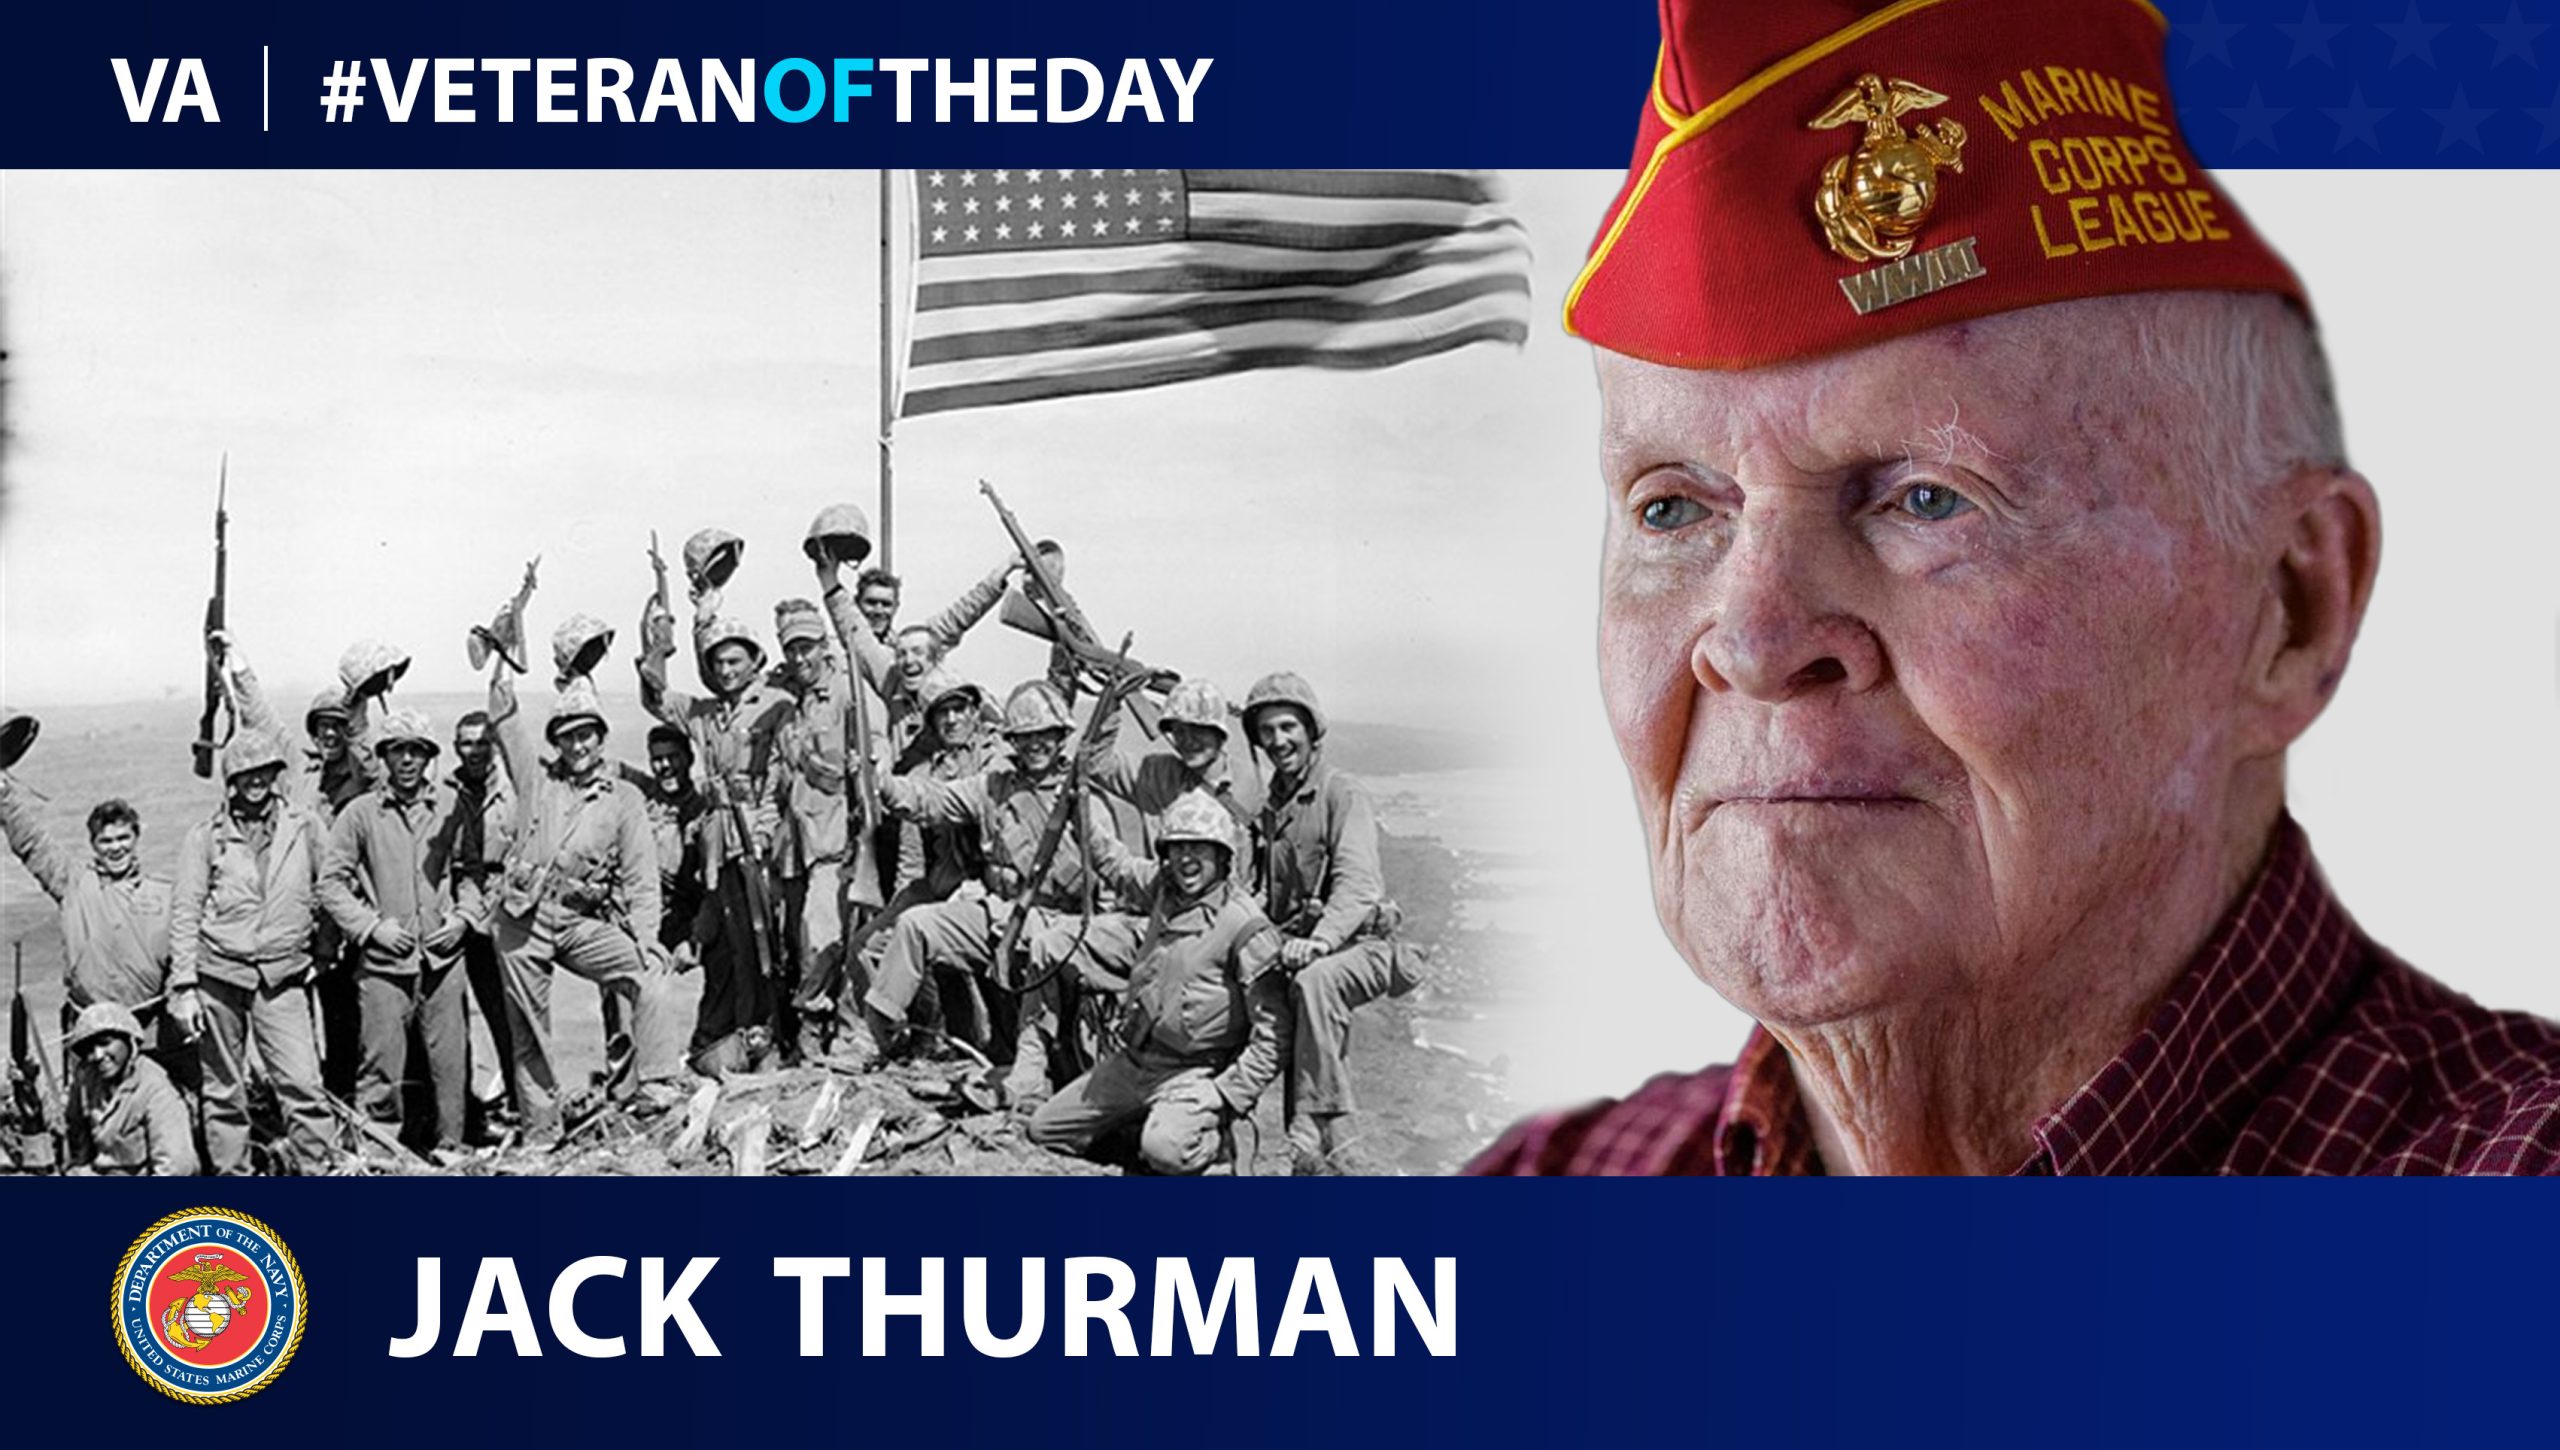 Marine Corps Veteran John “Jack” Thurman is today's Veteran of the Day.